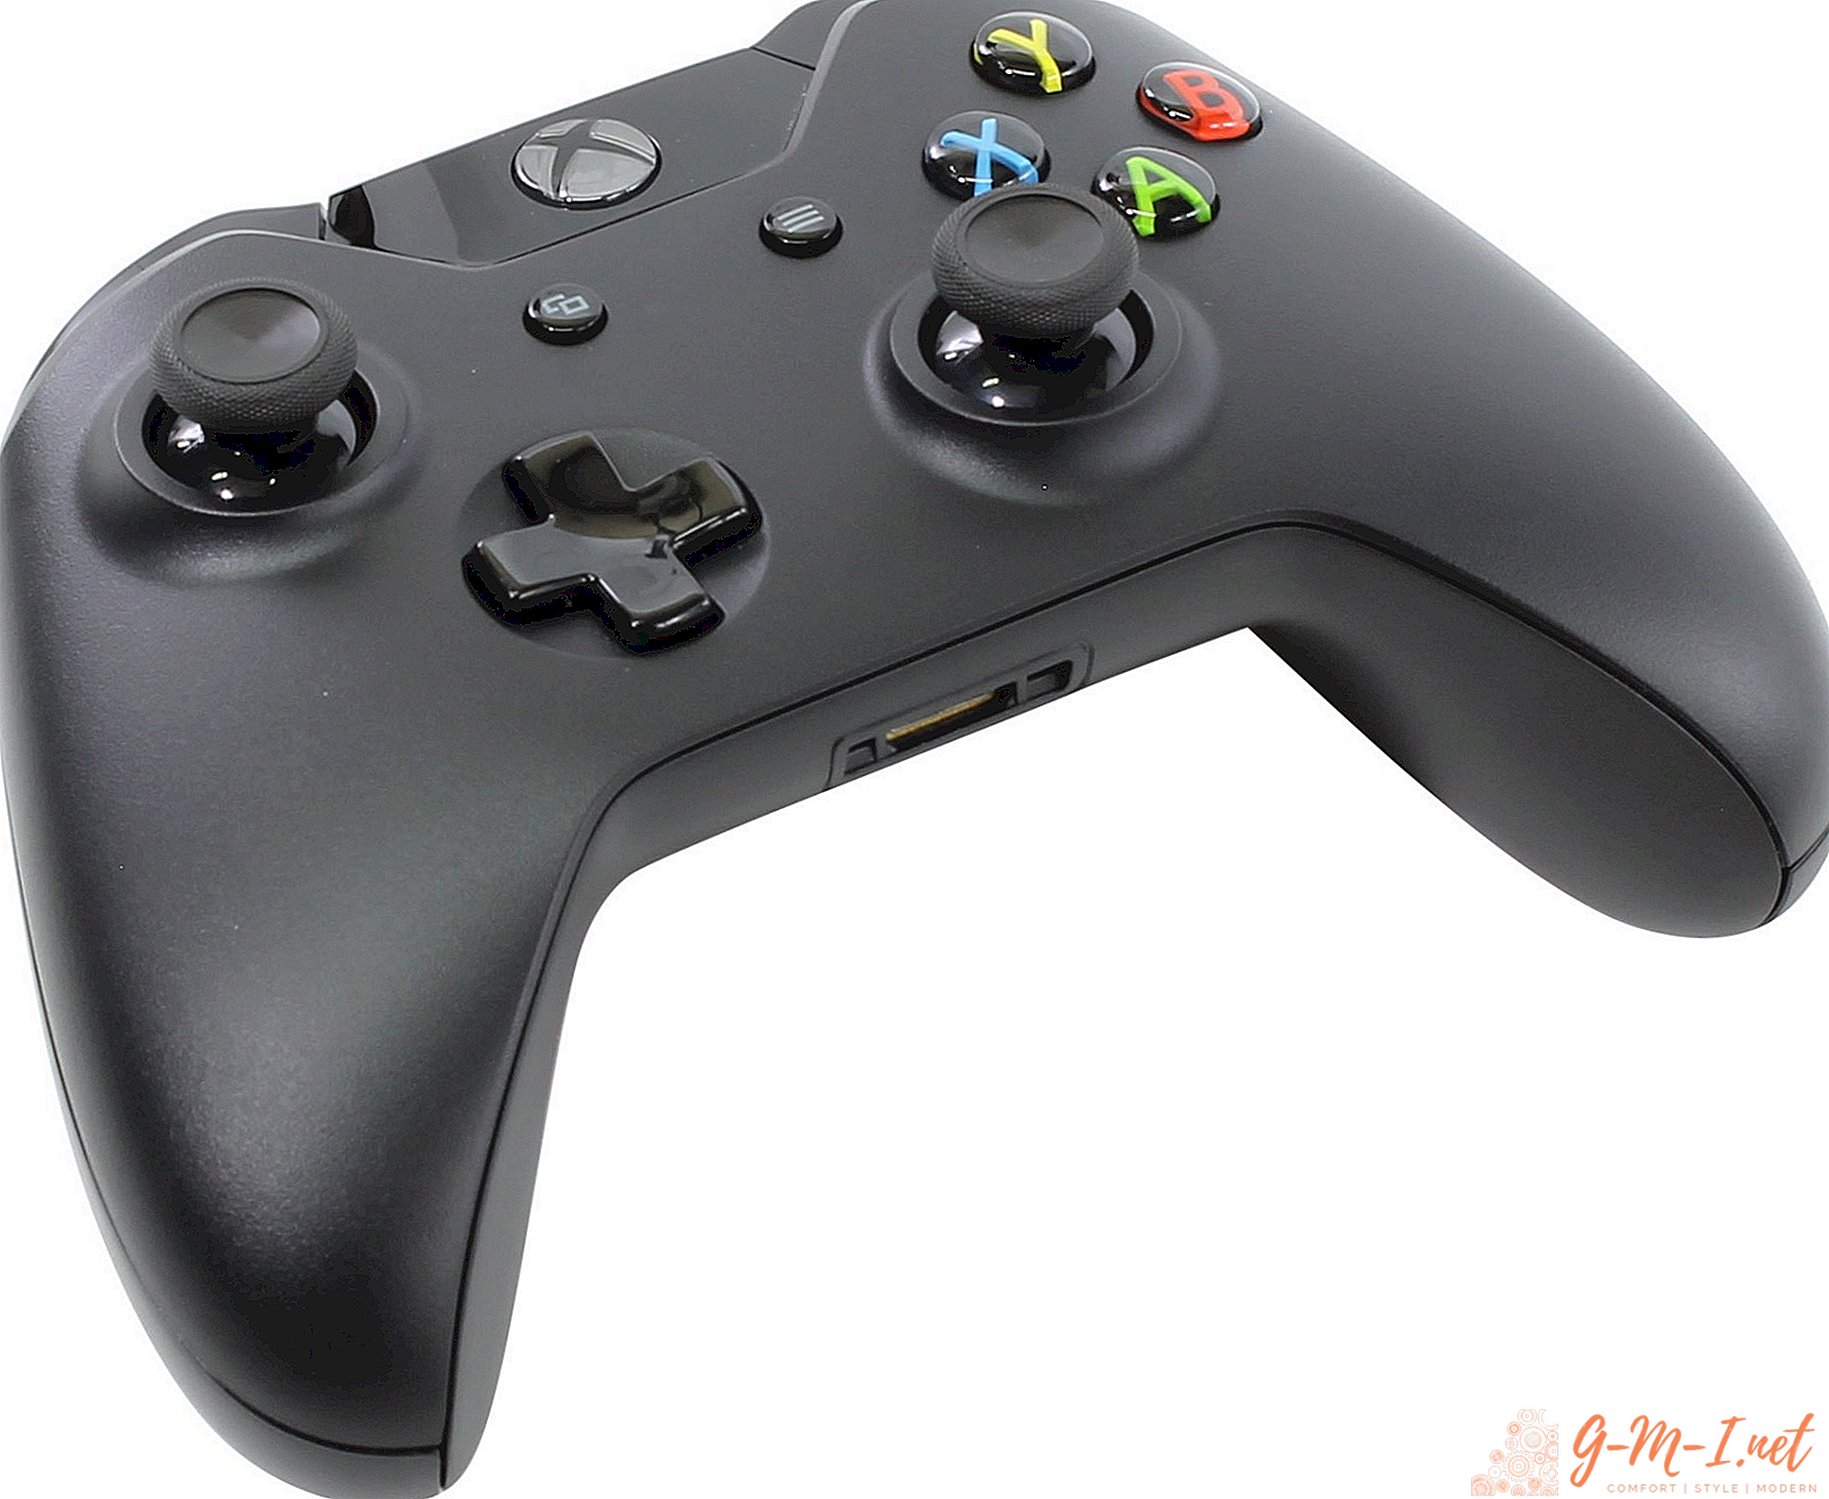 Cum să dezasamblați joystick-ul Xbox One